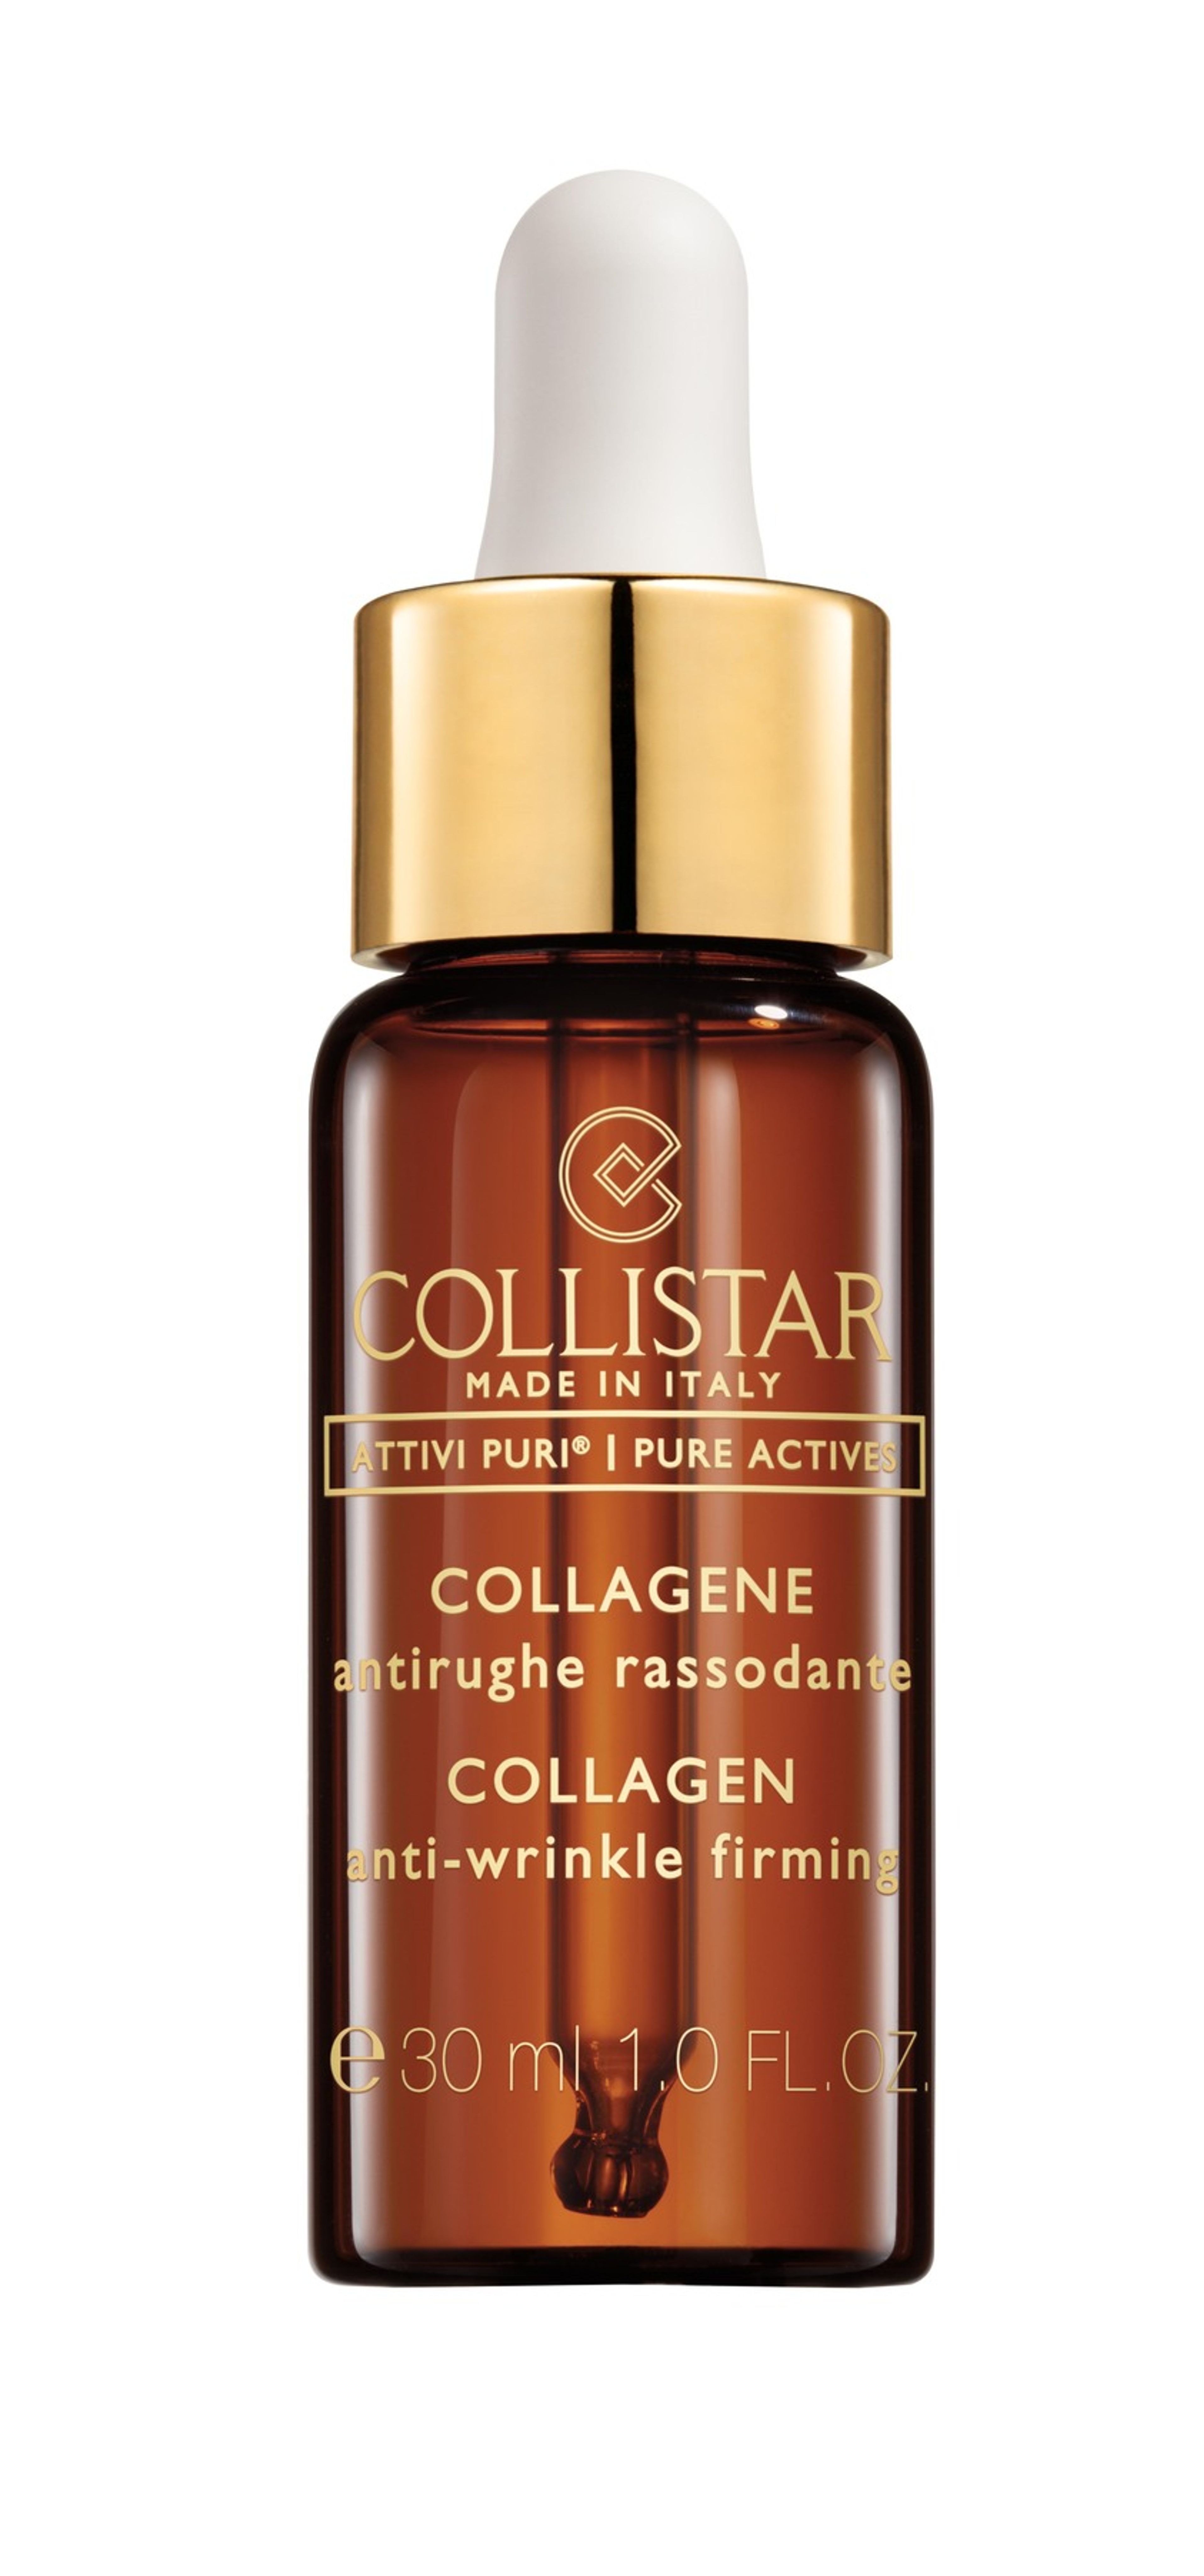 Collistar Collagene 1